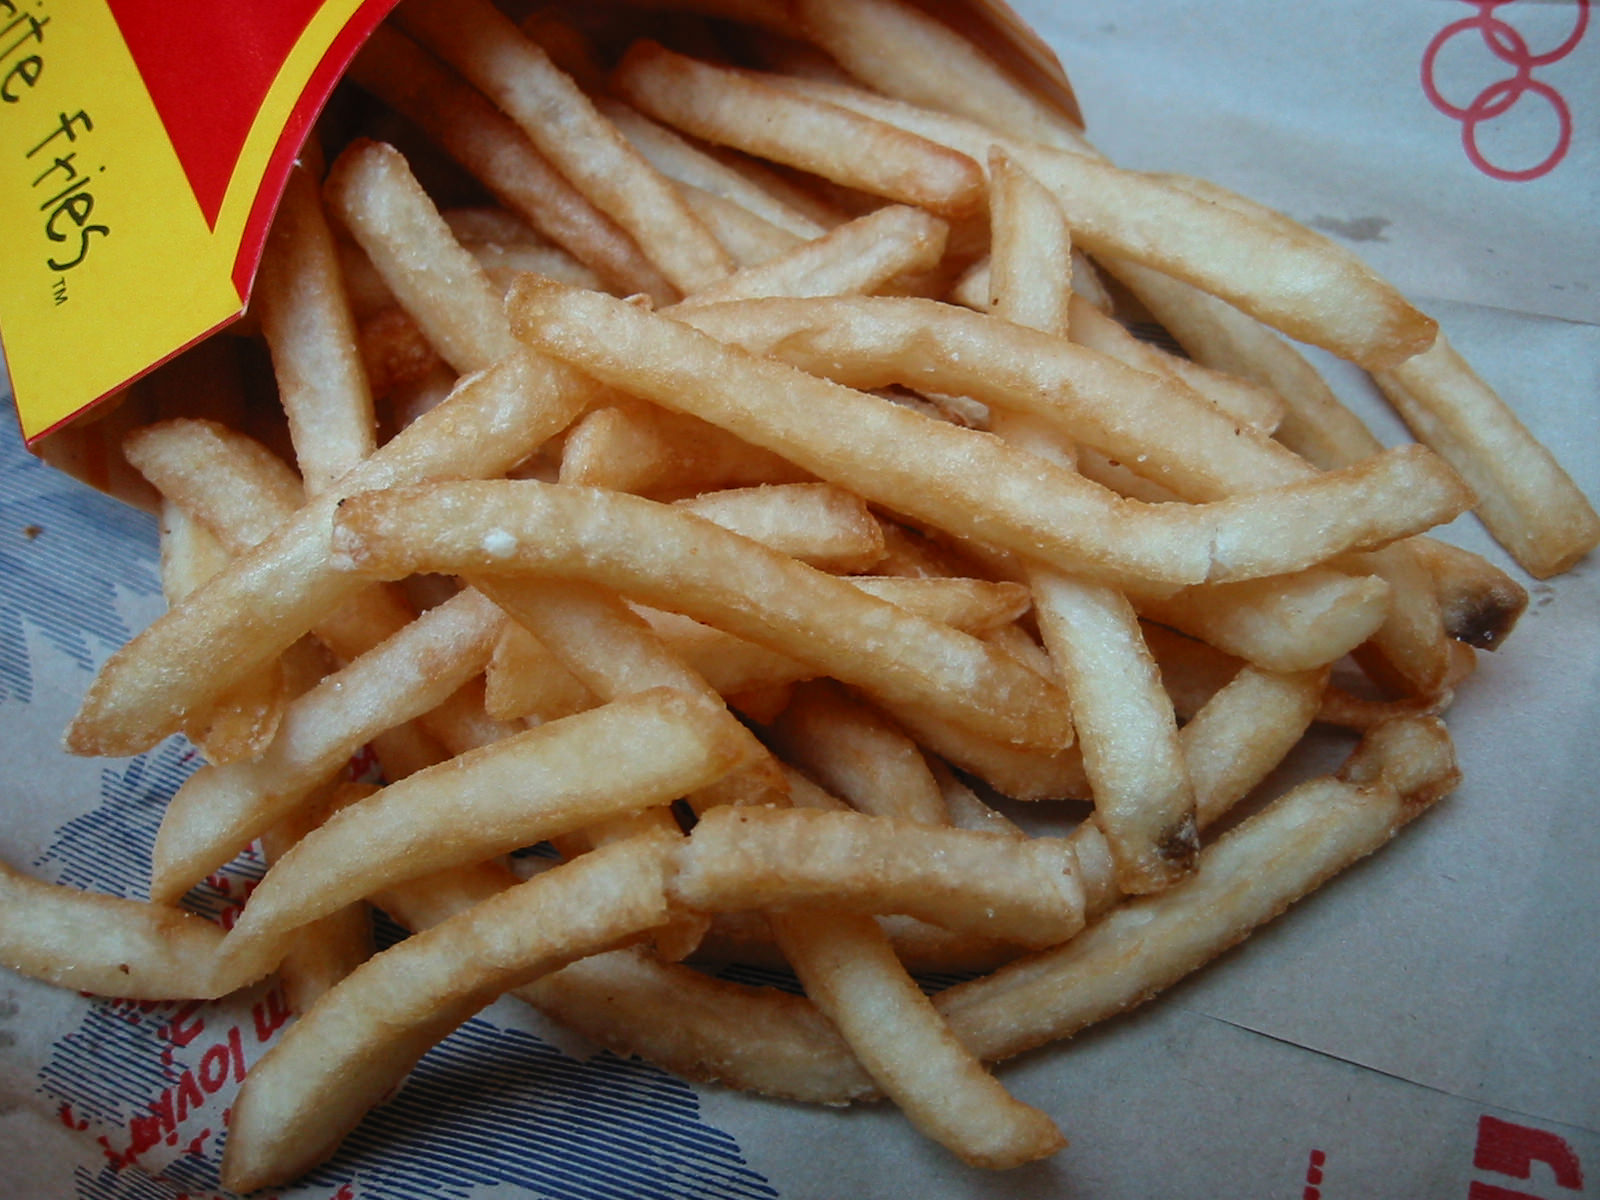 Bad fries